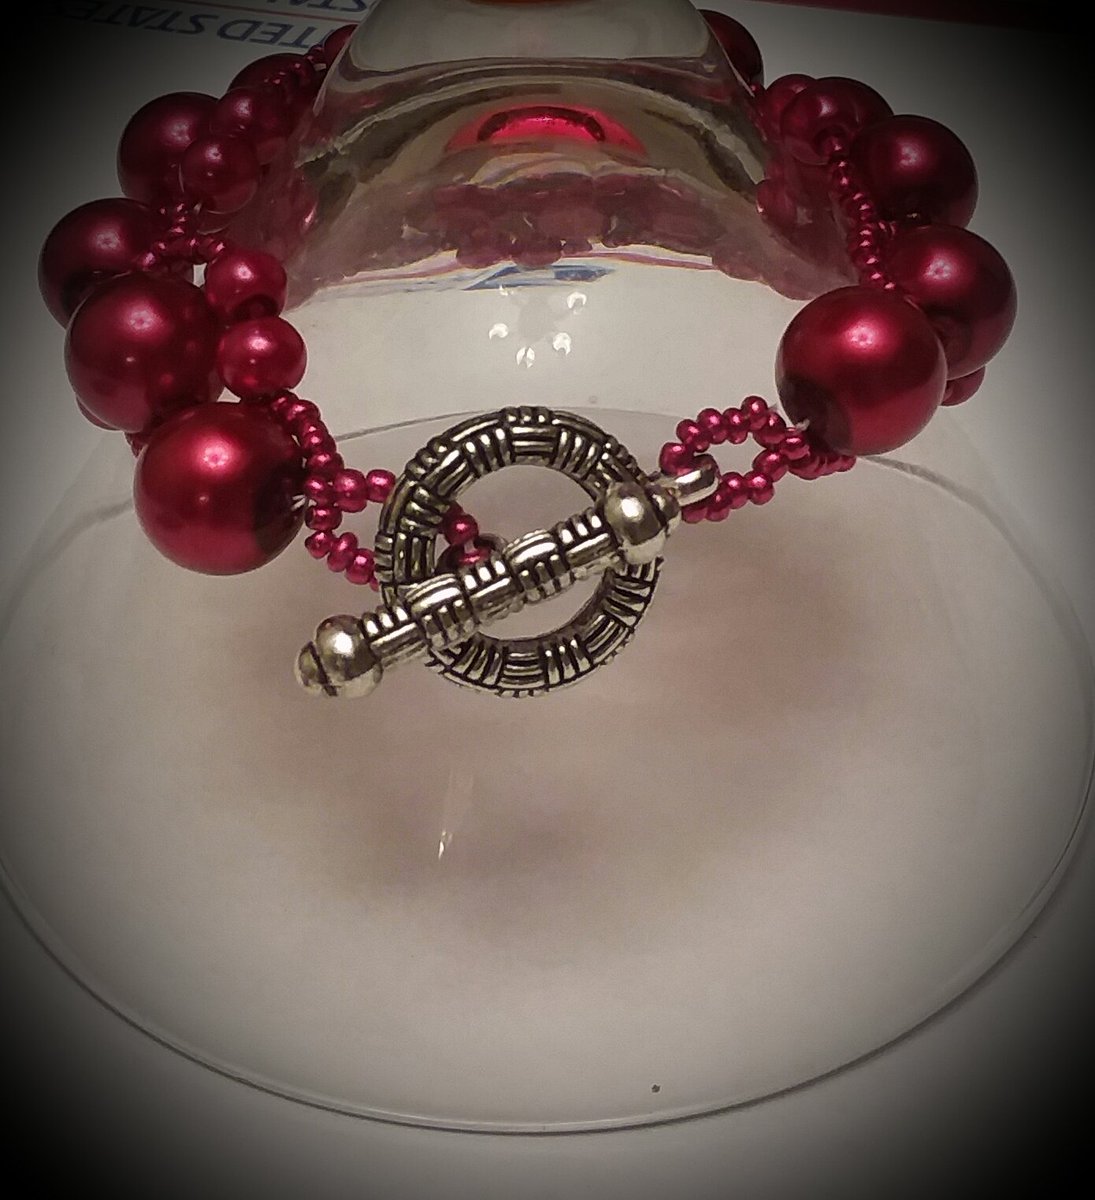 Symbolic Red pearl bracelet. Symbolizes wisdom&power.
facebook.com/marketplace/it…
@HandmadeShowTel @HandmadeSellers @handmadeseller @promotehandmade @ShareHandmade #handmade #handmadeartists #handcrafted  #craftshout #craftbizparty #handmadejewelry #jewelry #Bracelets #Pearl #Pearls